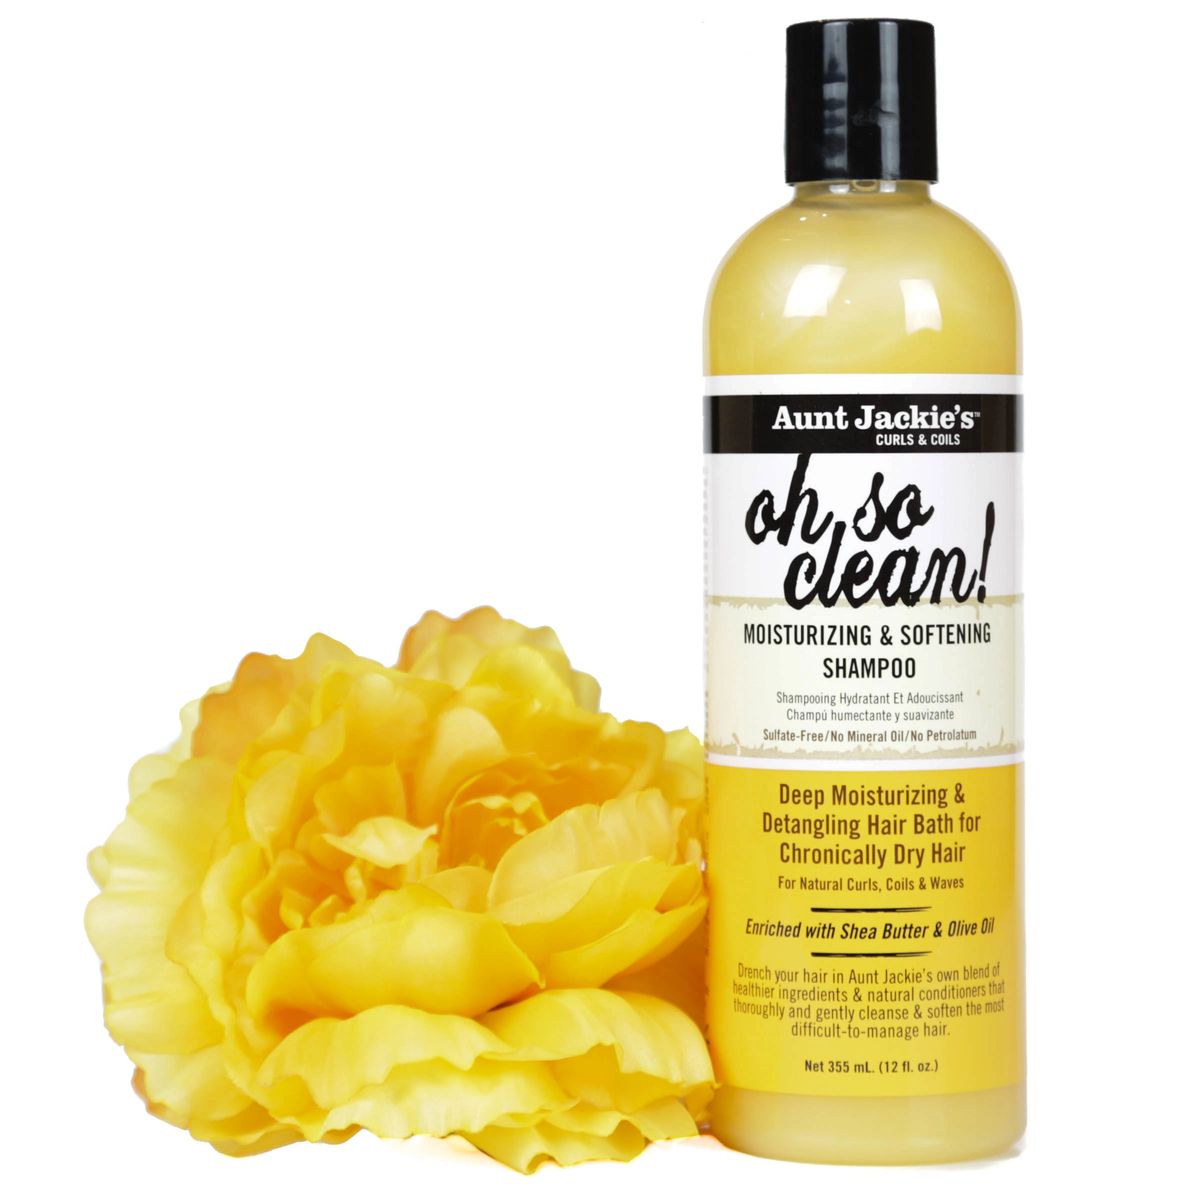 Aunt Jackie's Oh So Clean Moisturizing & Softening Shampoo - 12 oz